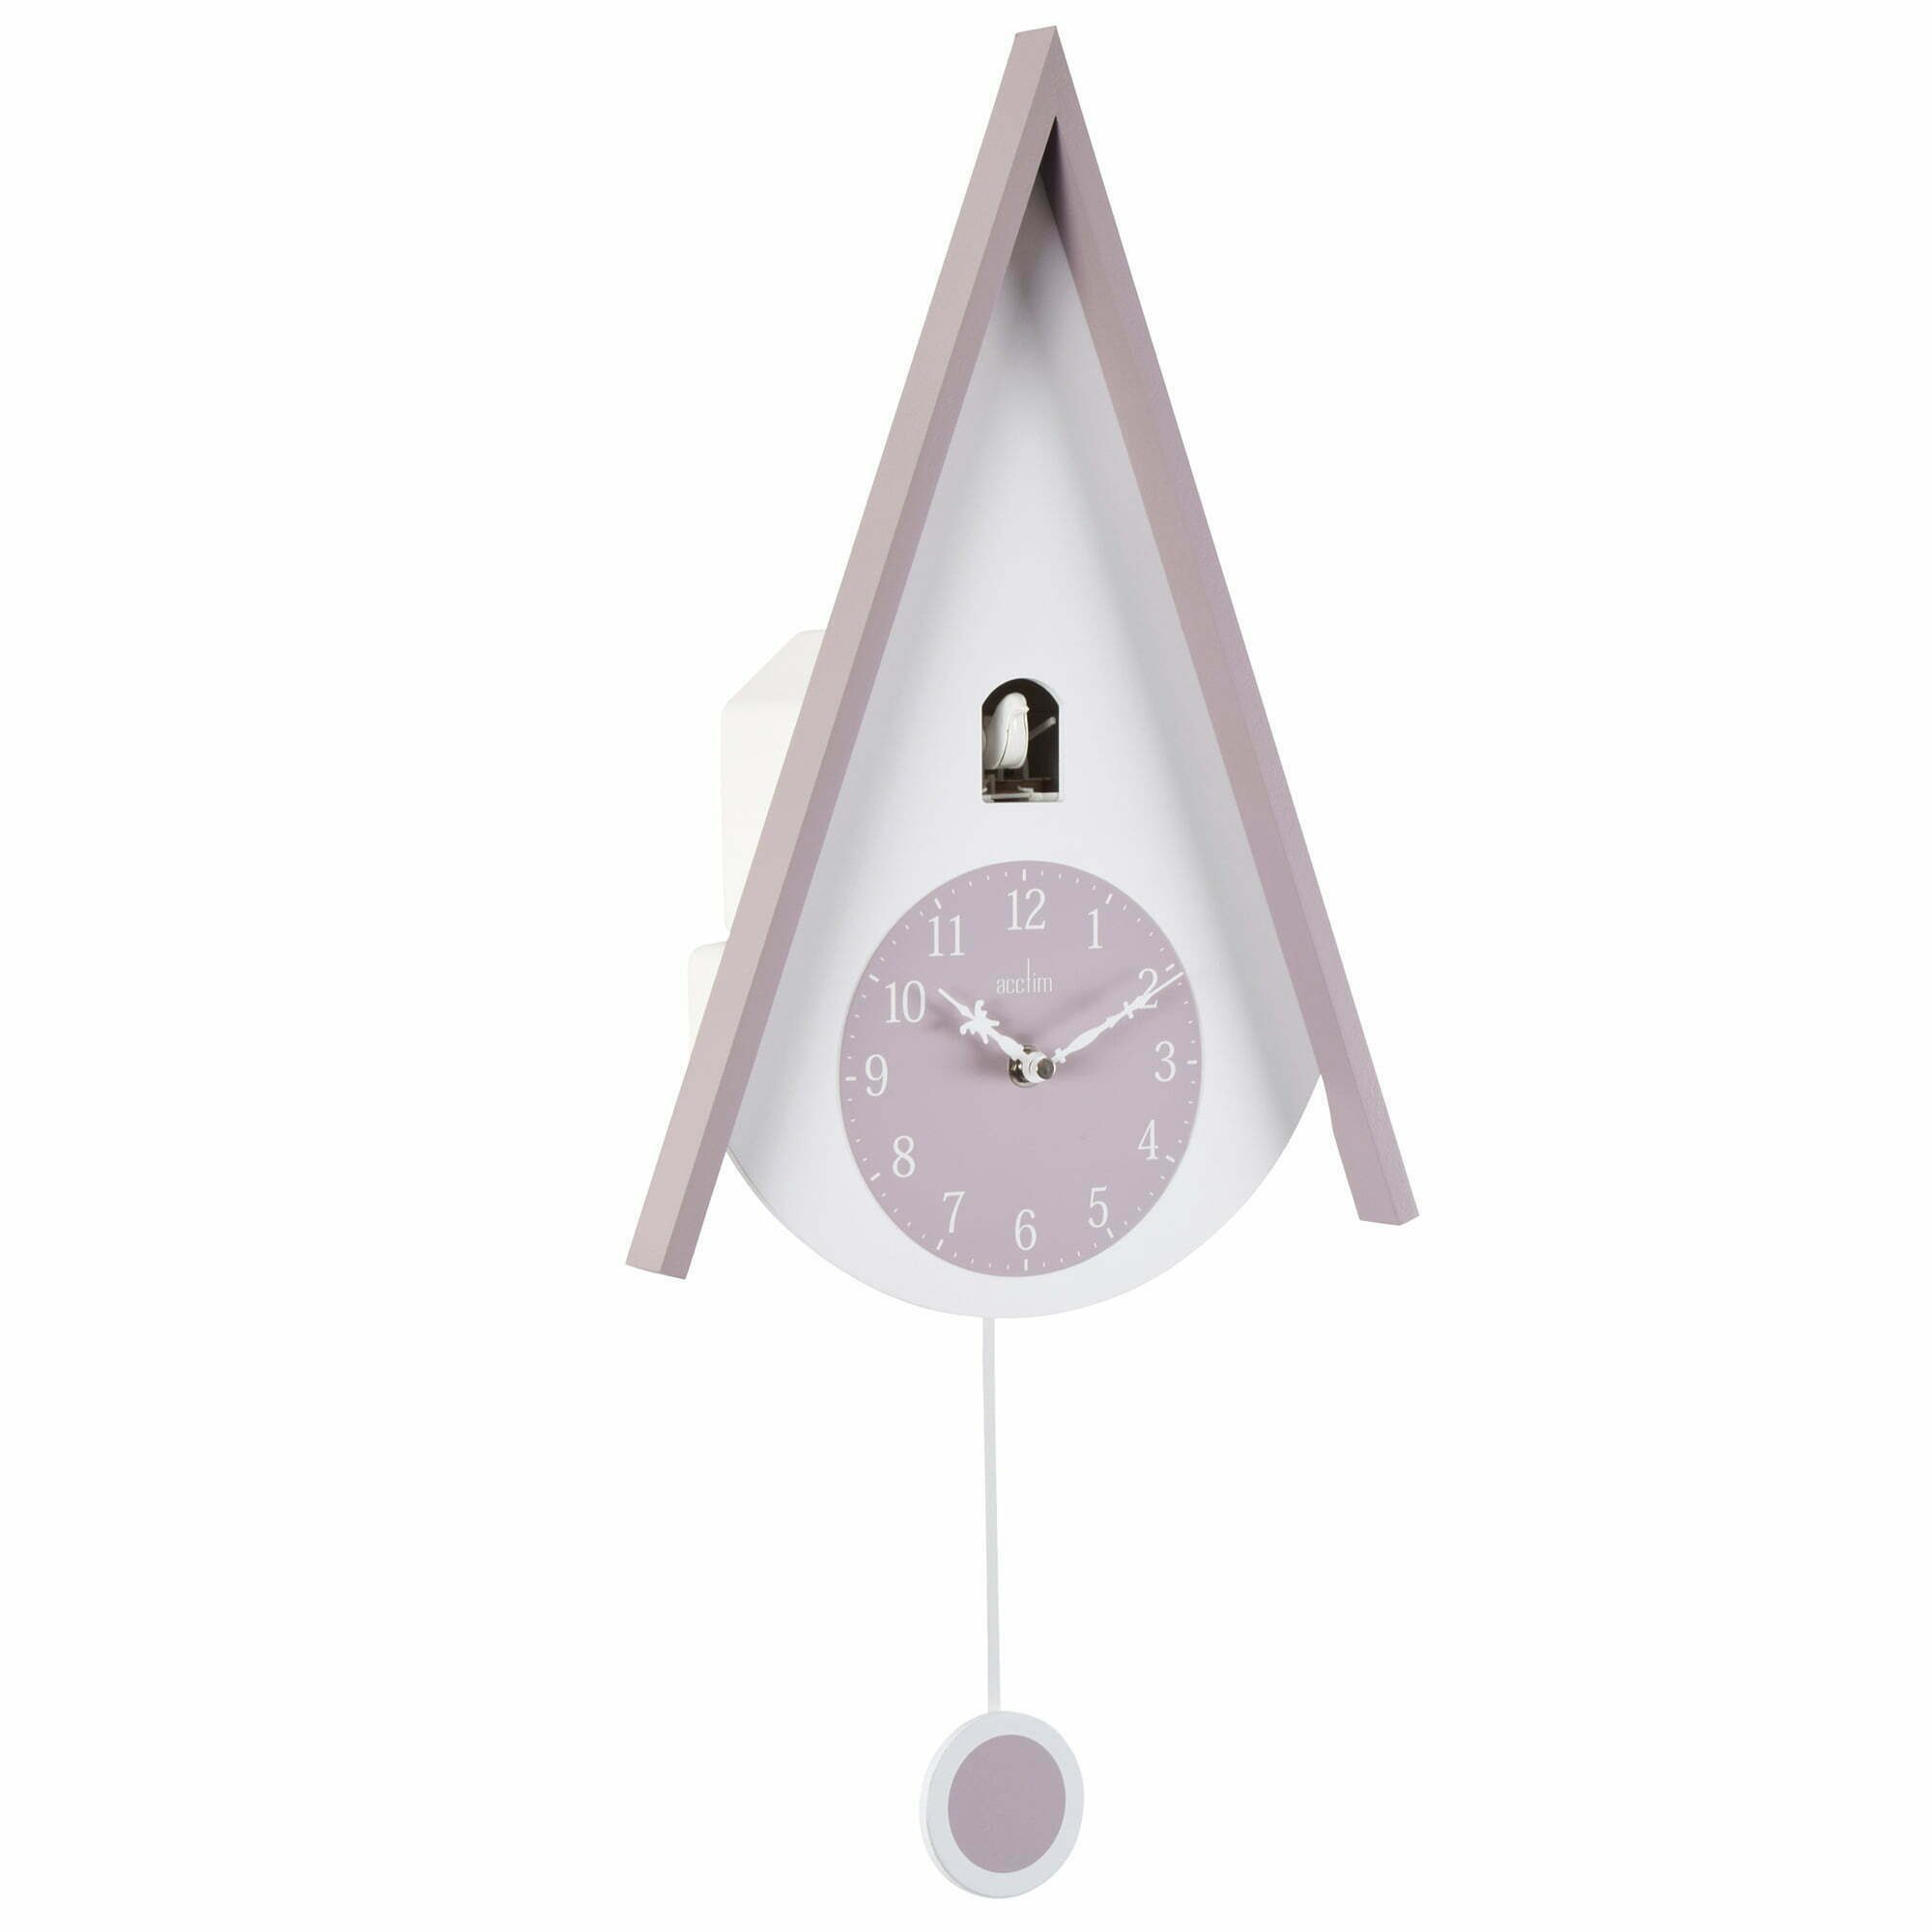 Acctim Lulea Chalet Style Wall Cuckoo Clock Mauve & White 60cm High 